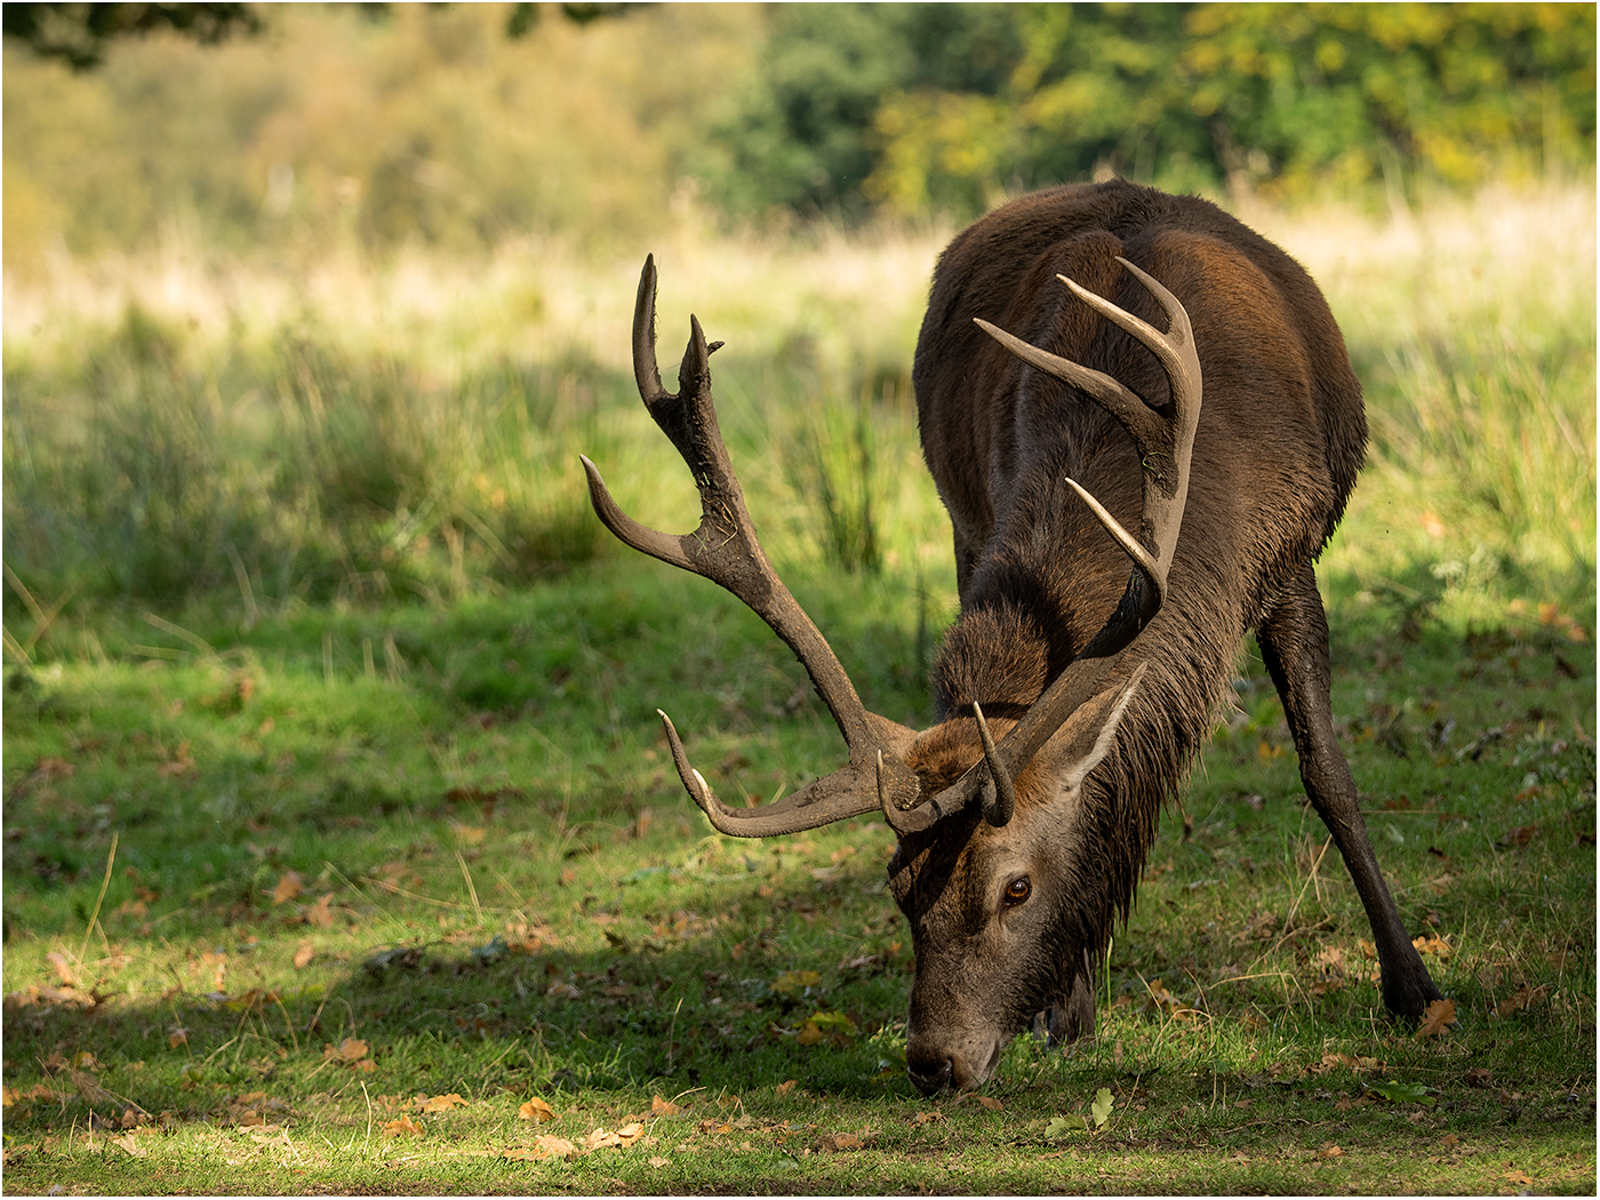 Feeding Red Deer Stag, by Paul Twambley